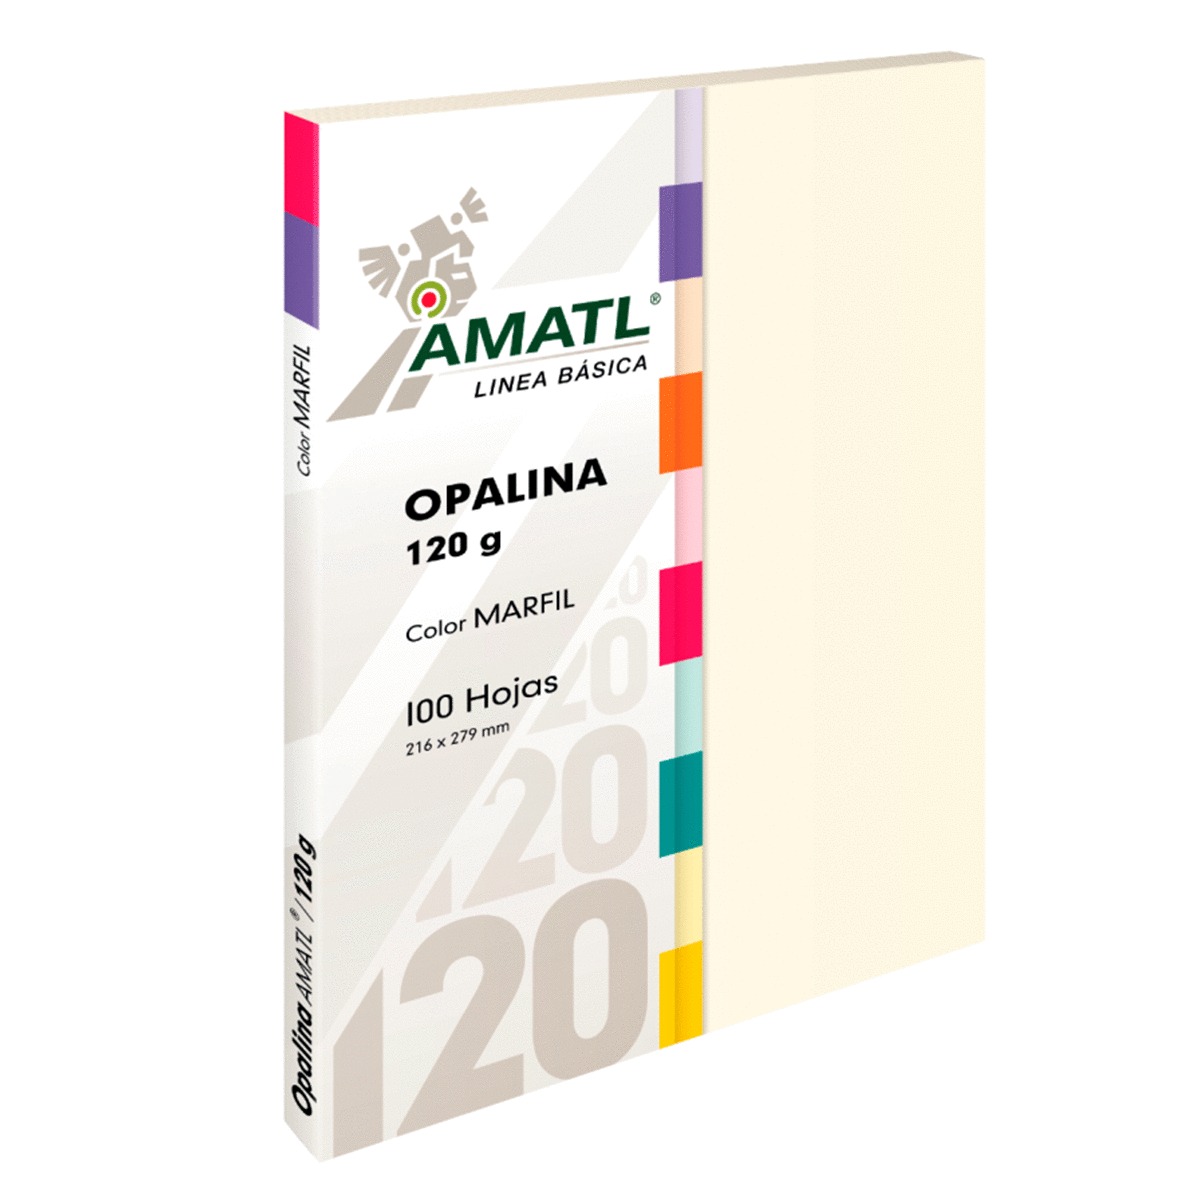 Papel Opalina Pochteca Amatl / 100 hojas / Carta / Marfil / 120 gr